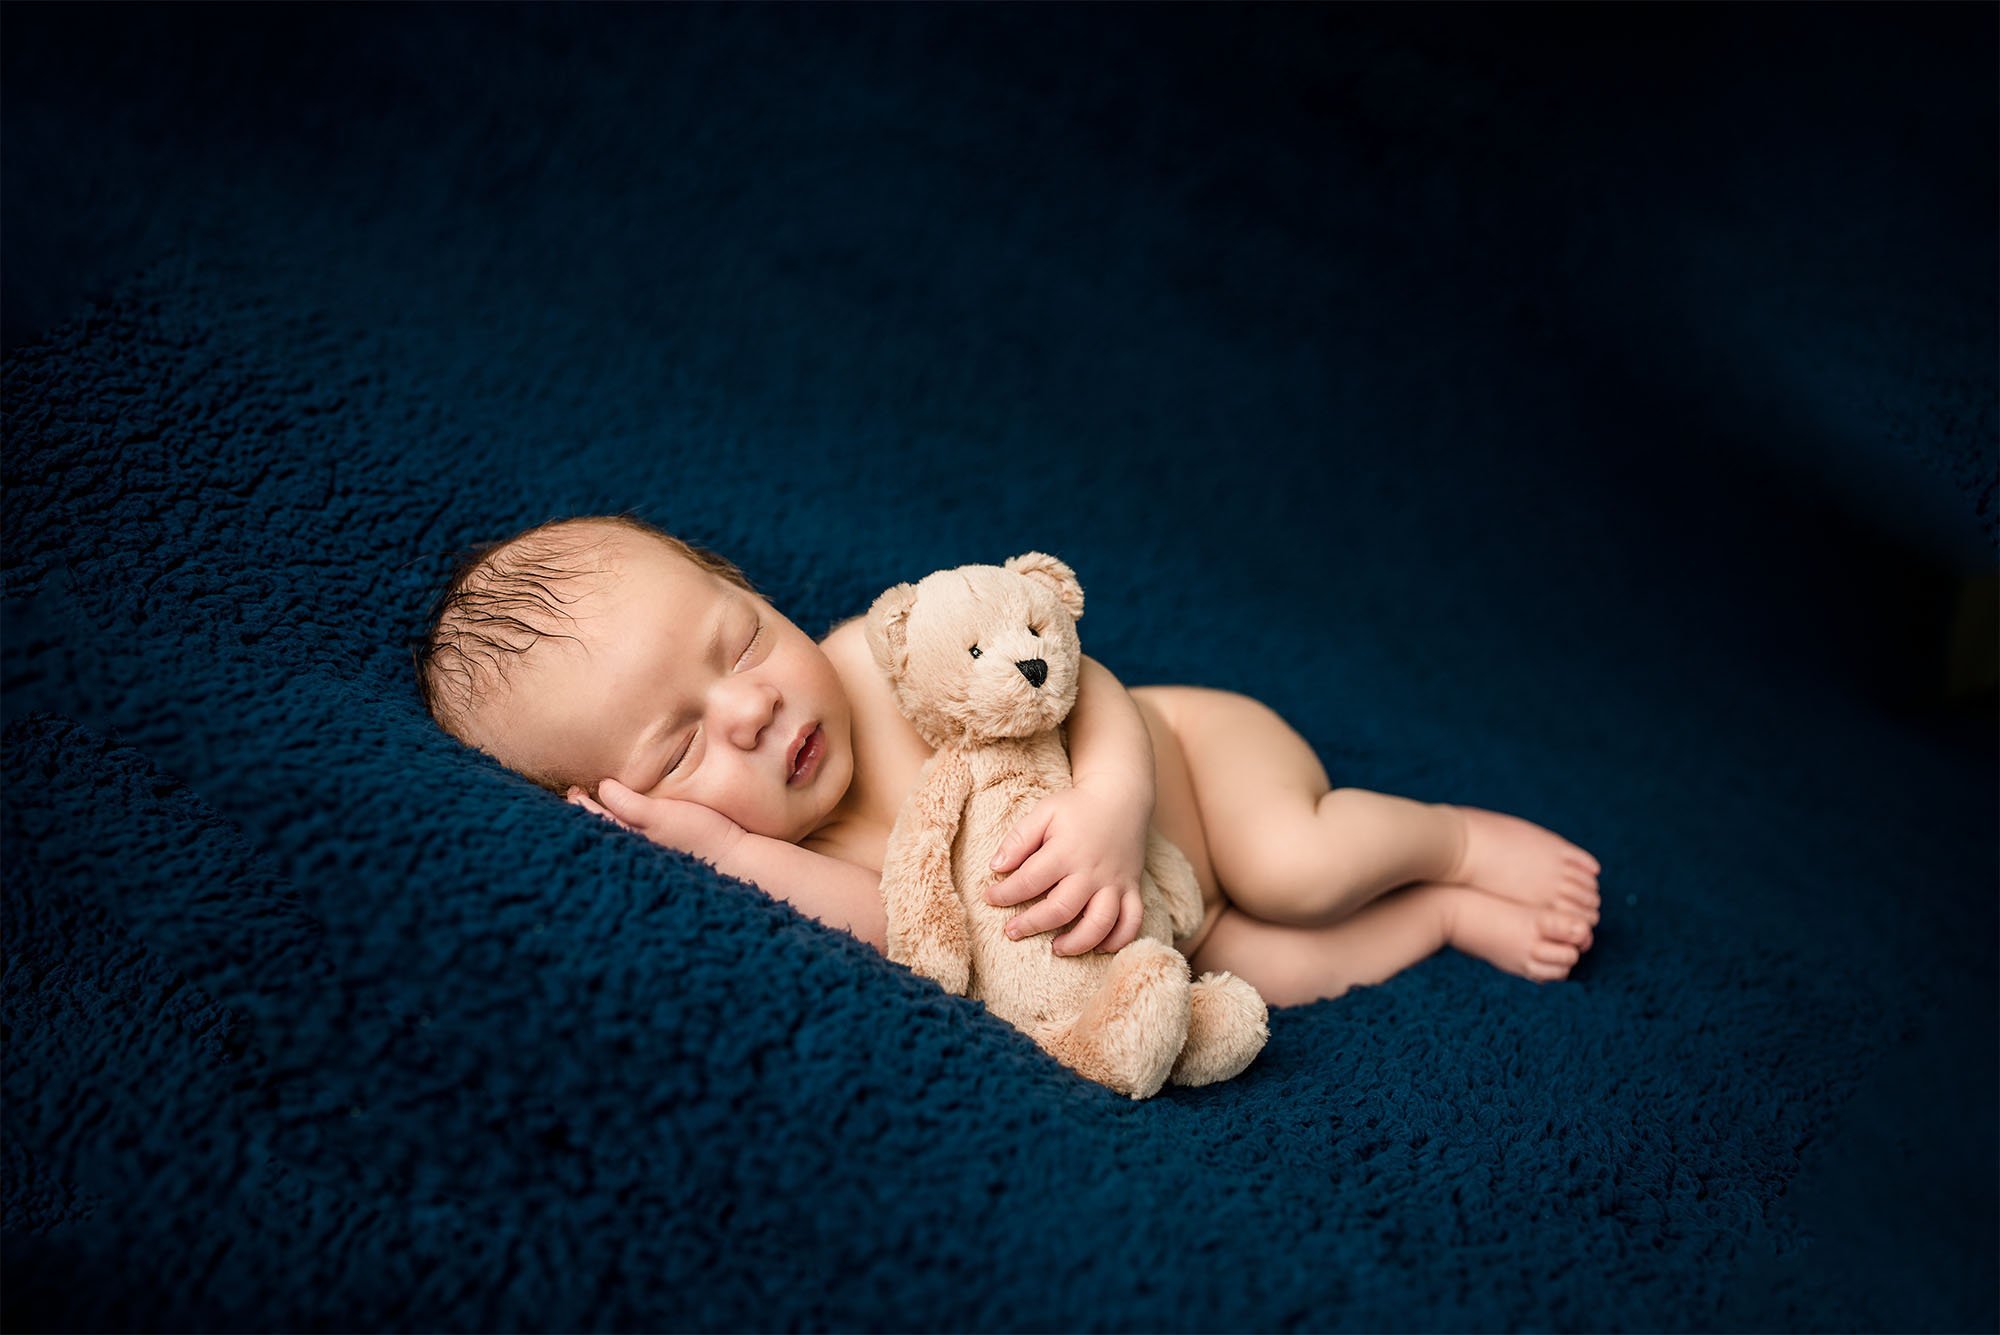 newborn baby sleeping on blue blanket with teddy under his arm